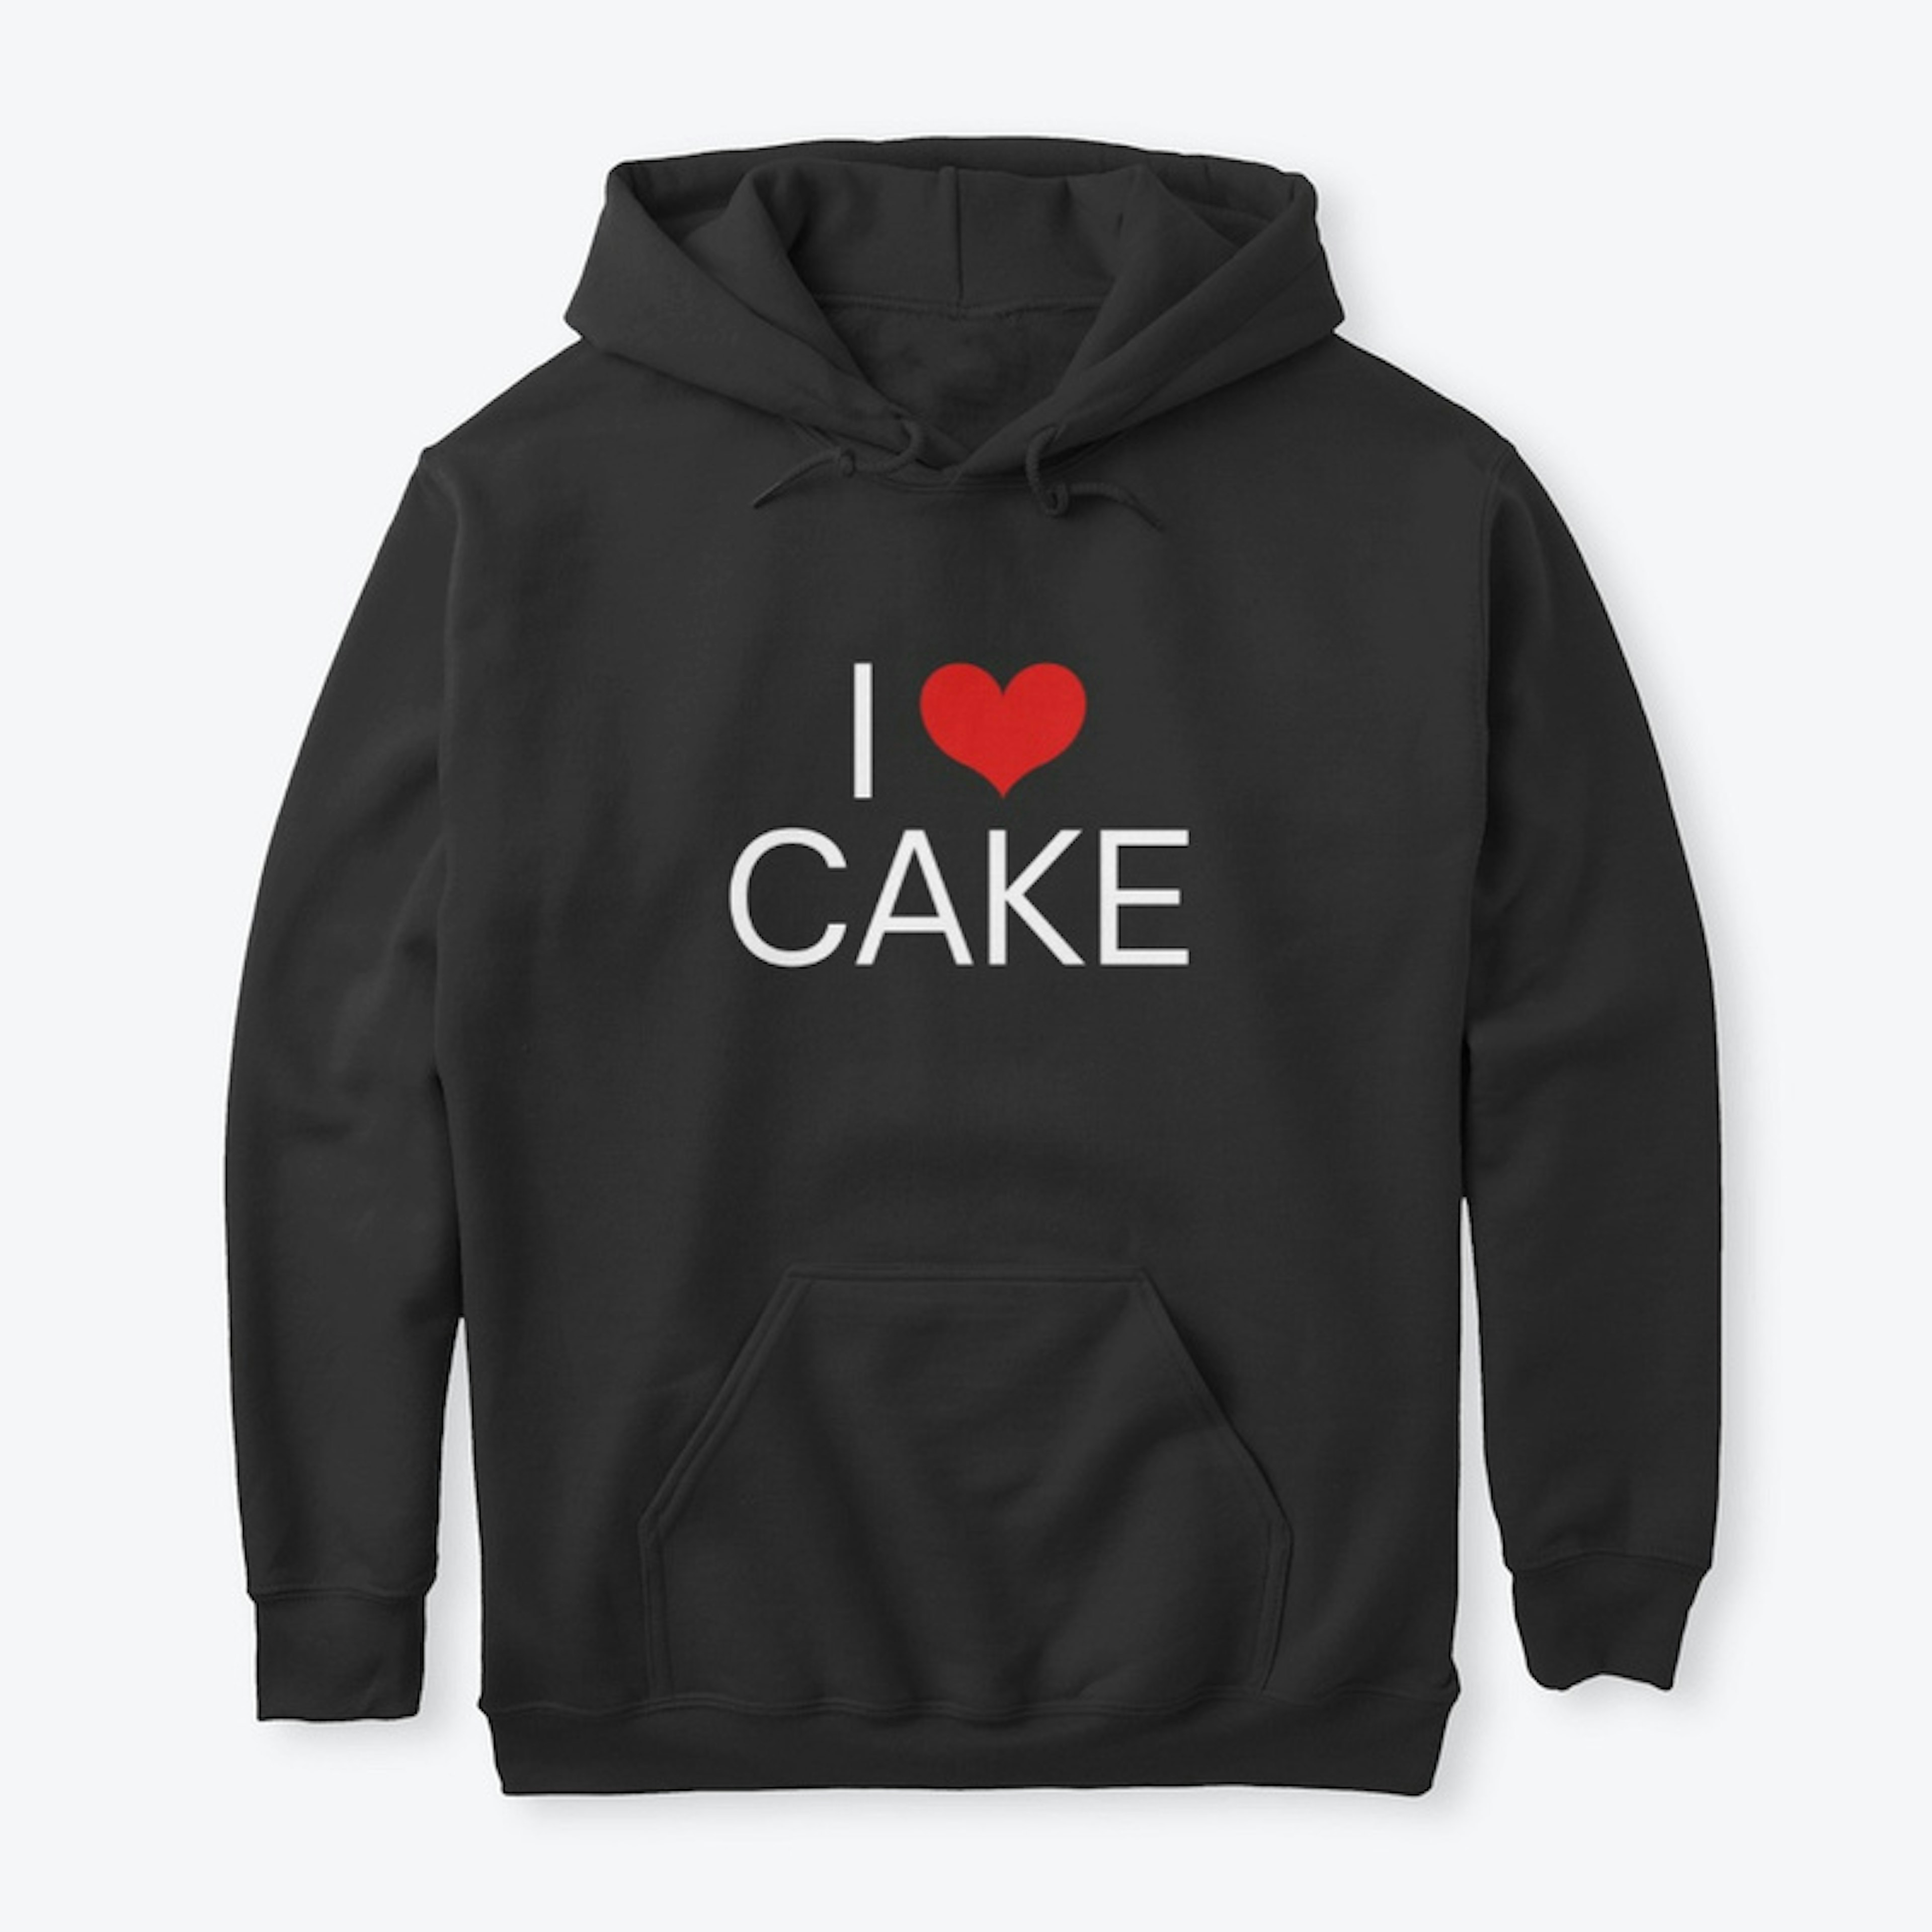 Legacy Cakery - I LOVE CAKE